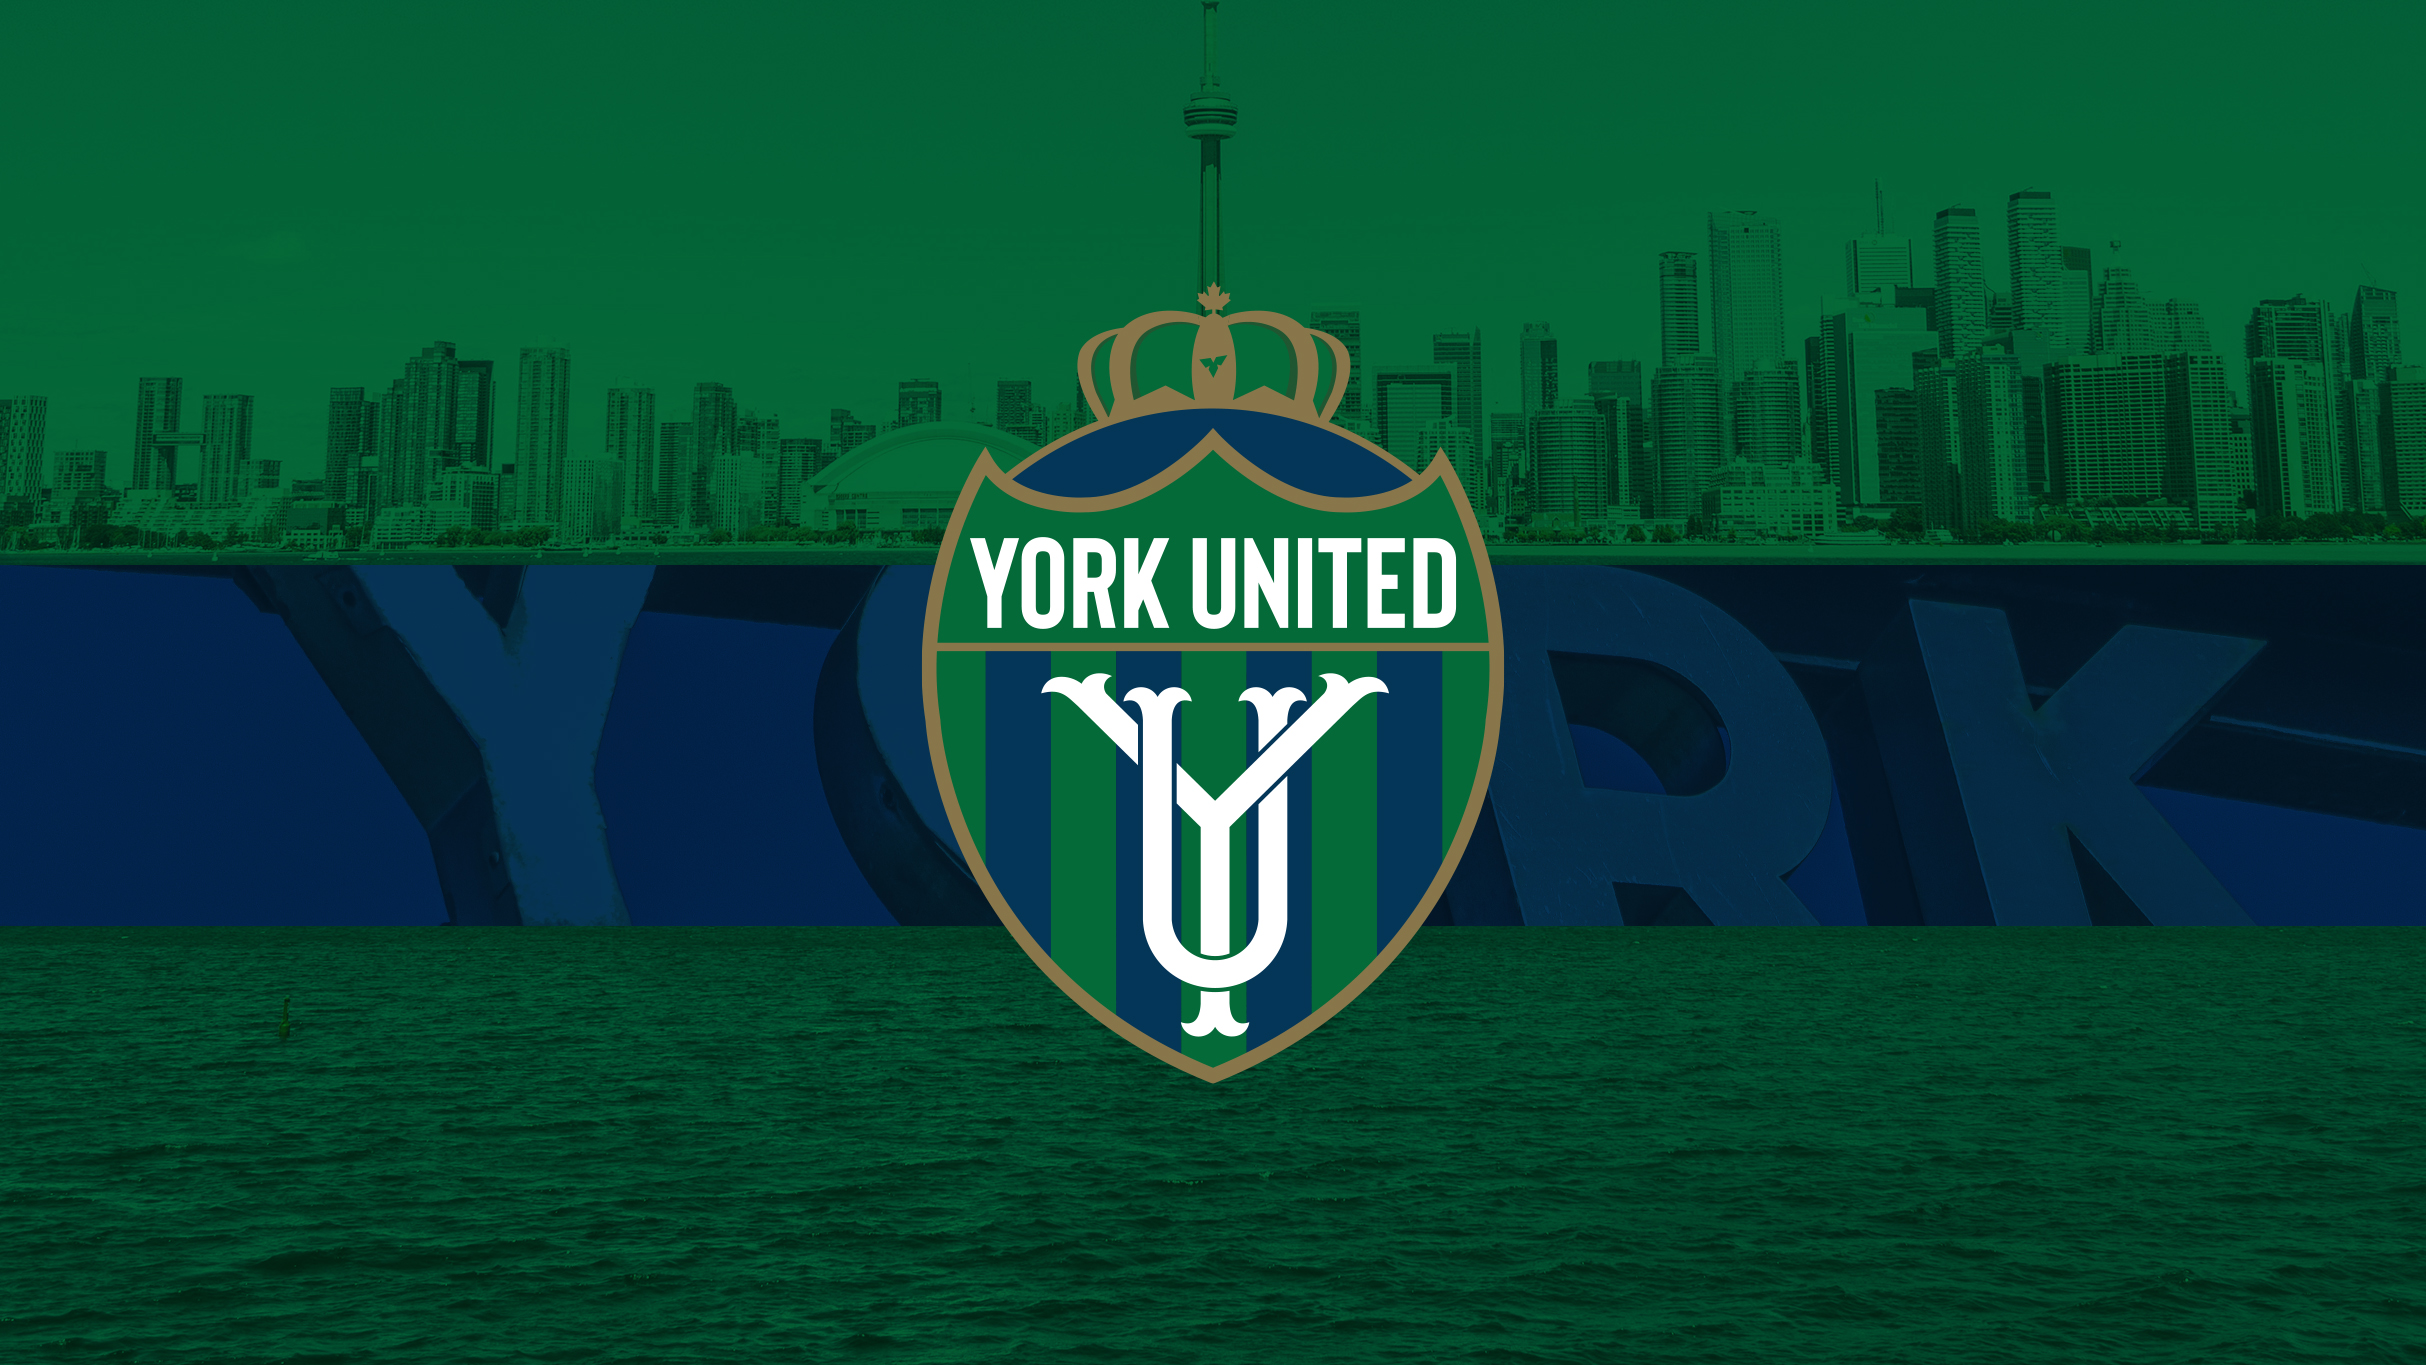 York United FC vs. Vancouver FC